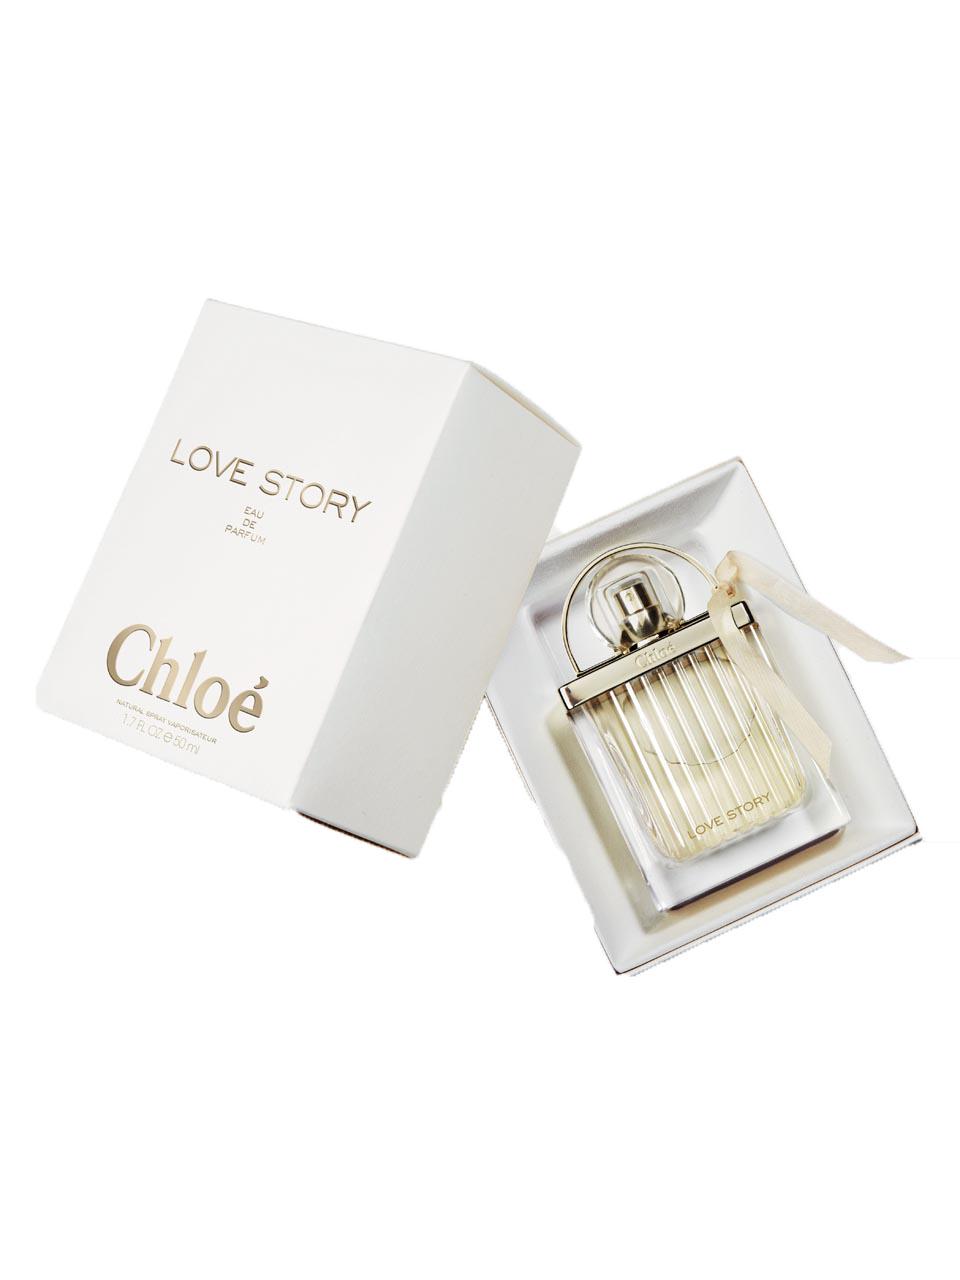 Chloé Love Story Eau de Frankfurt Shopping ml Parfum 50 Online | Airport